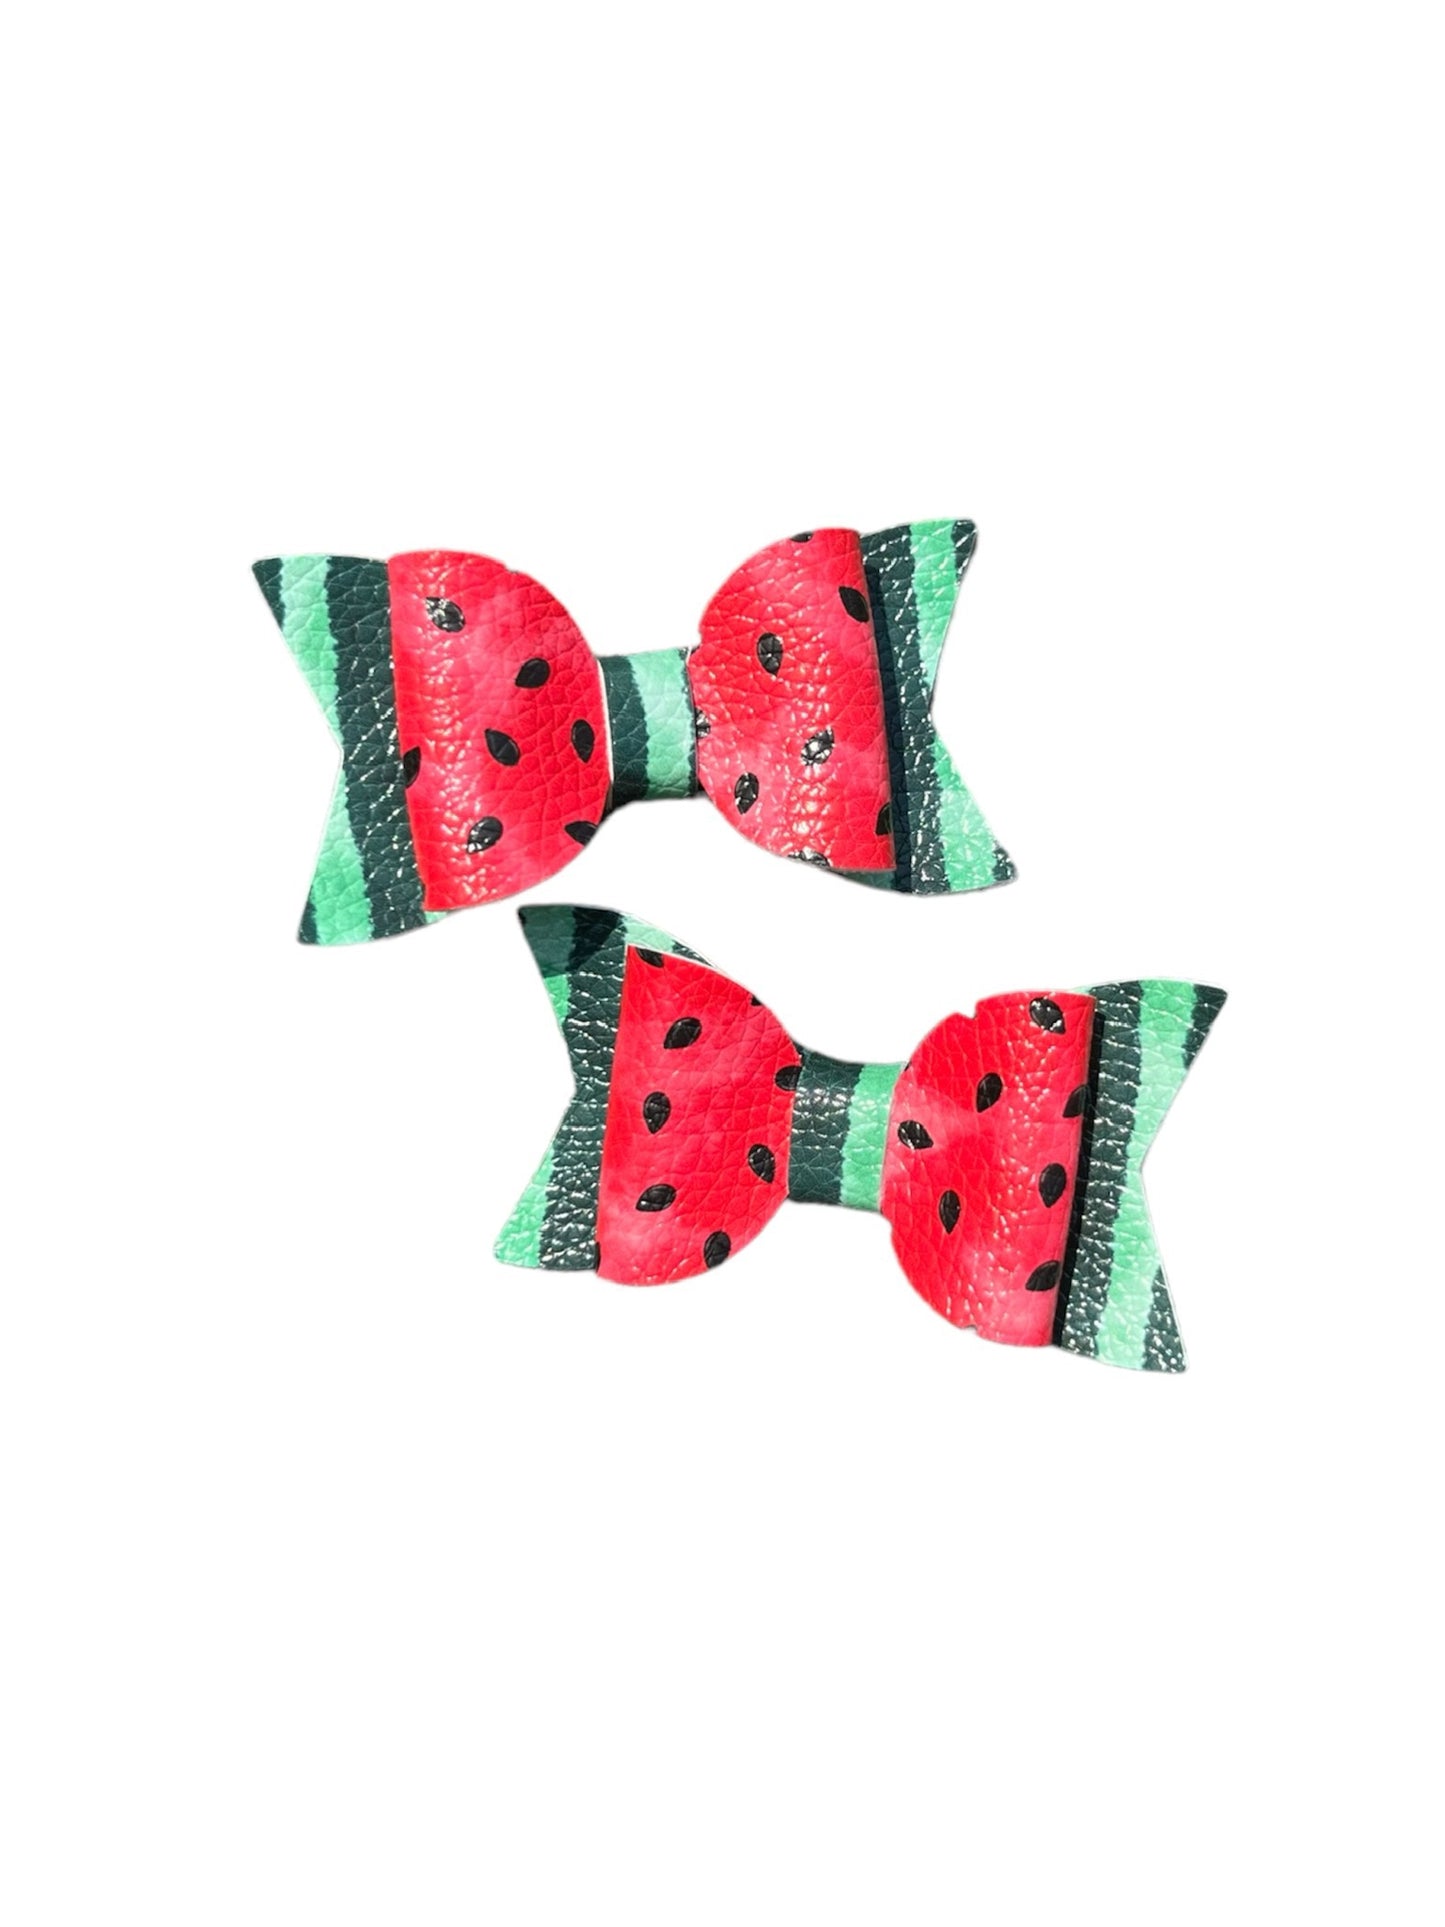 Watermelon Pigtail Bows!